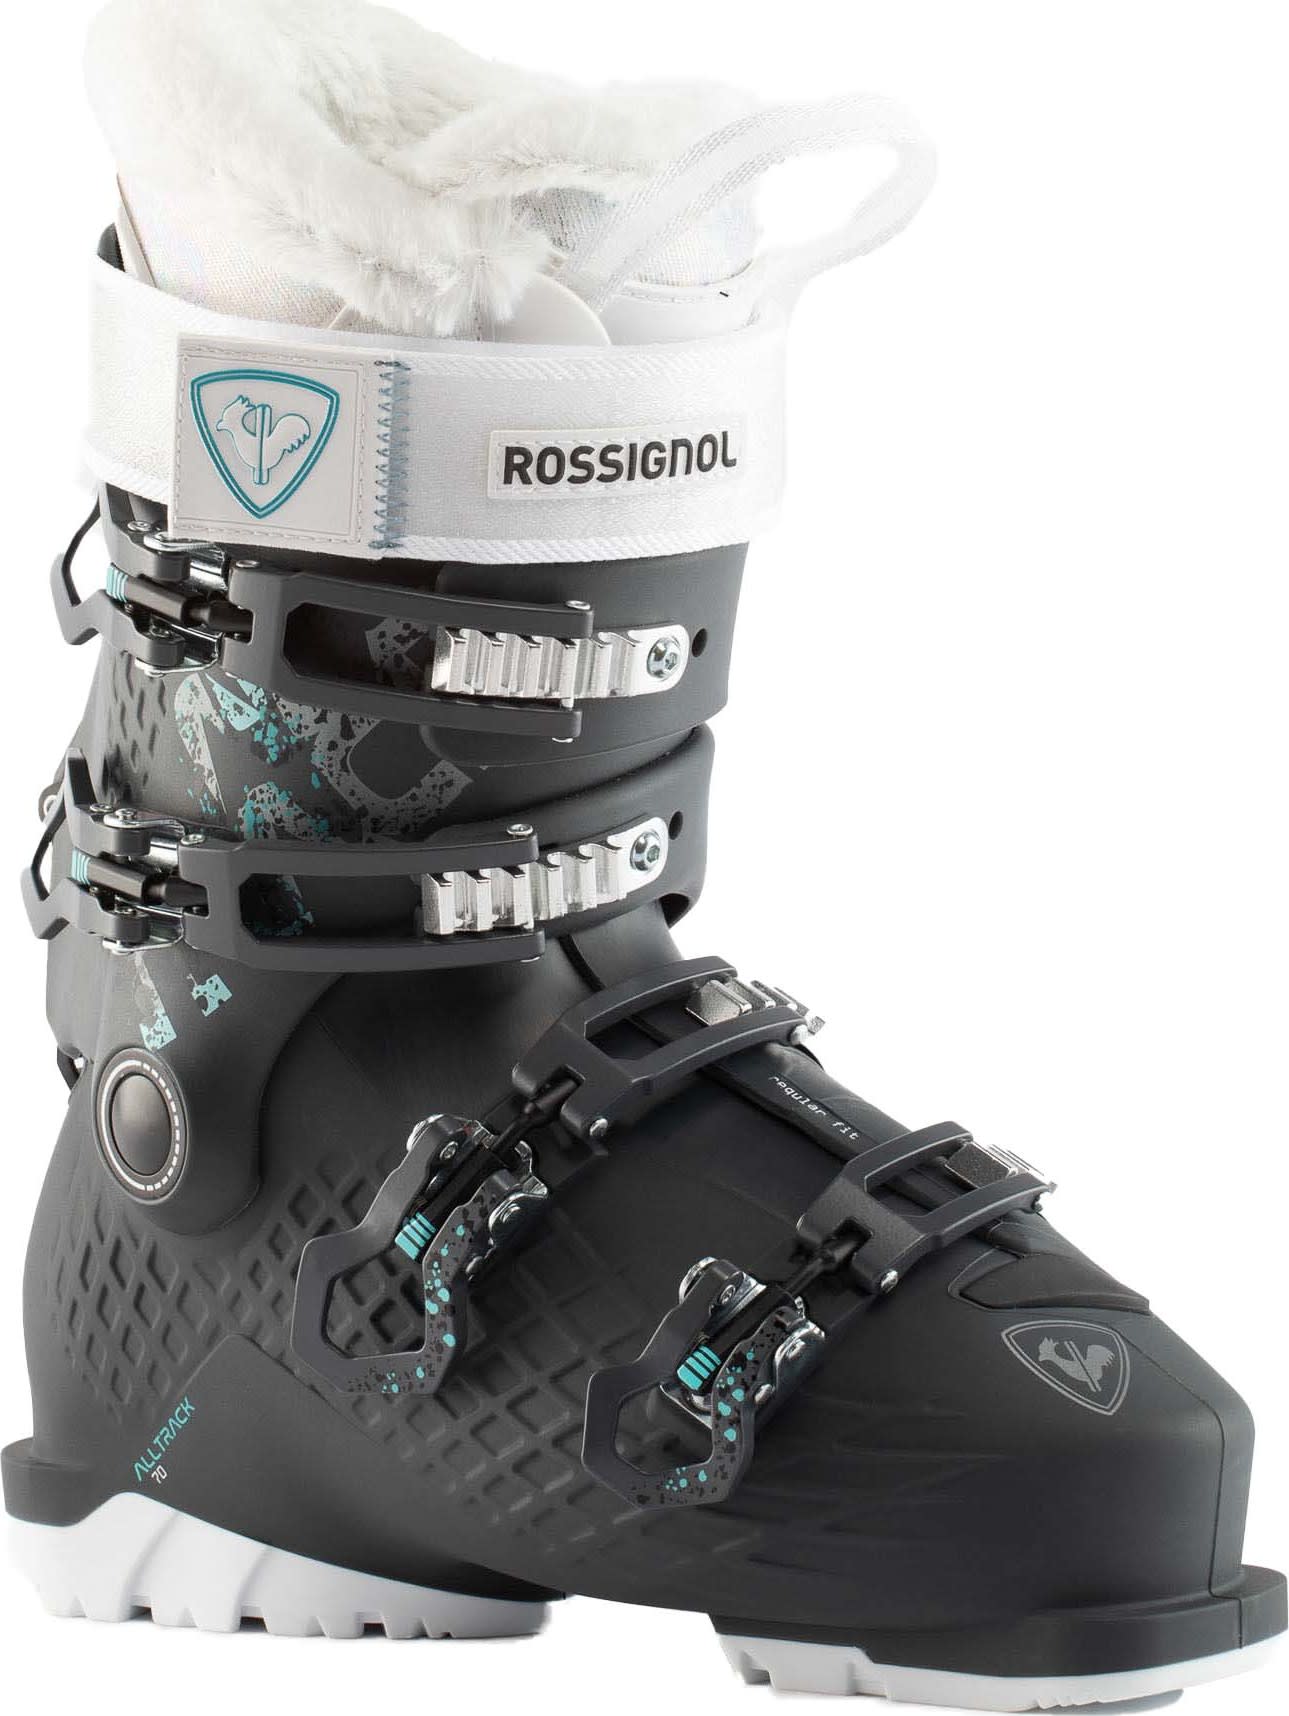 Rossignol Women’s All Mountain Ski Boots Alltrack 70 W Black